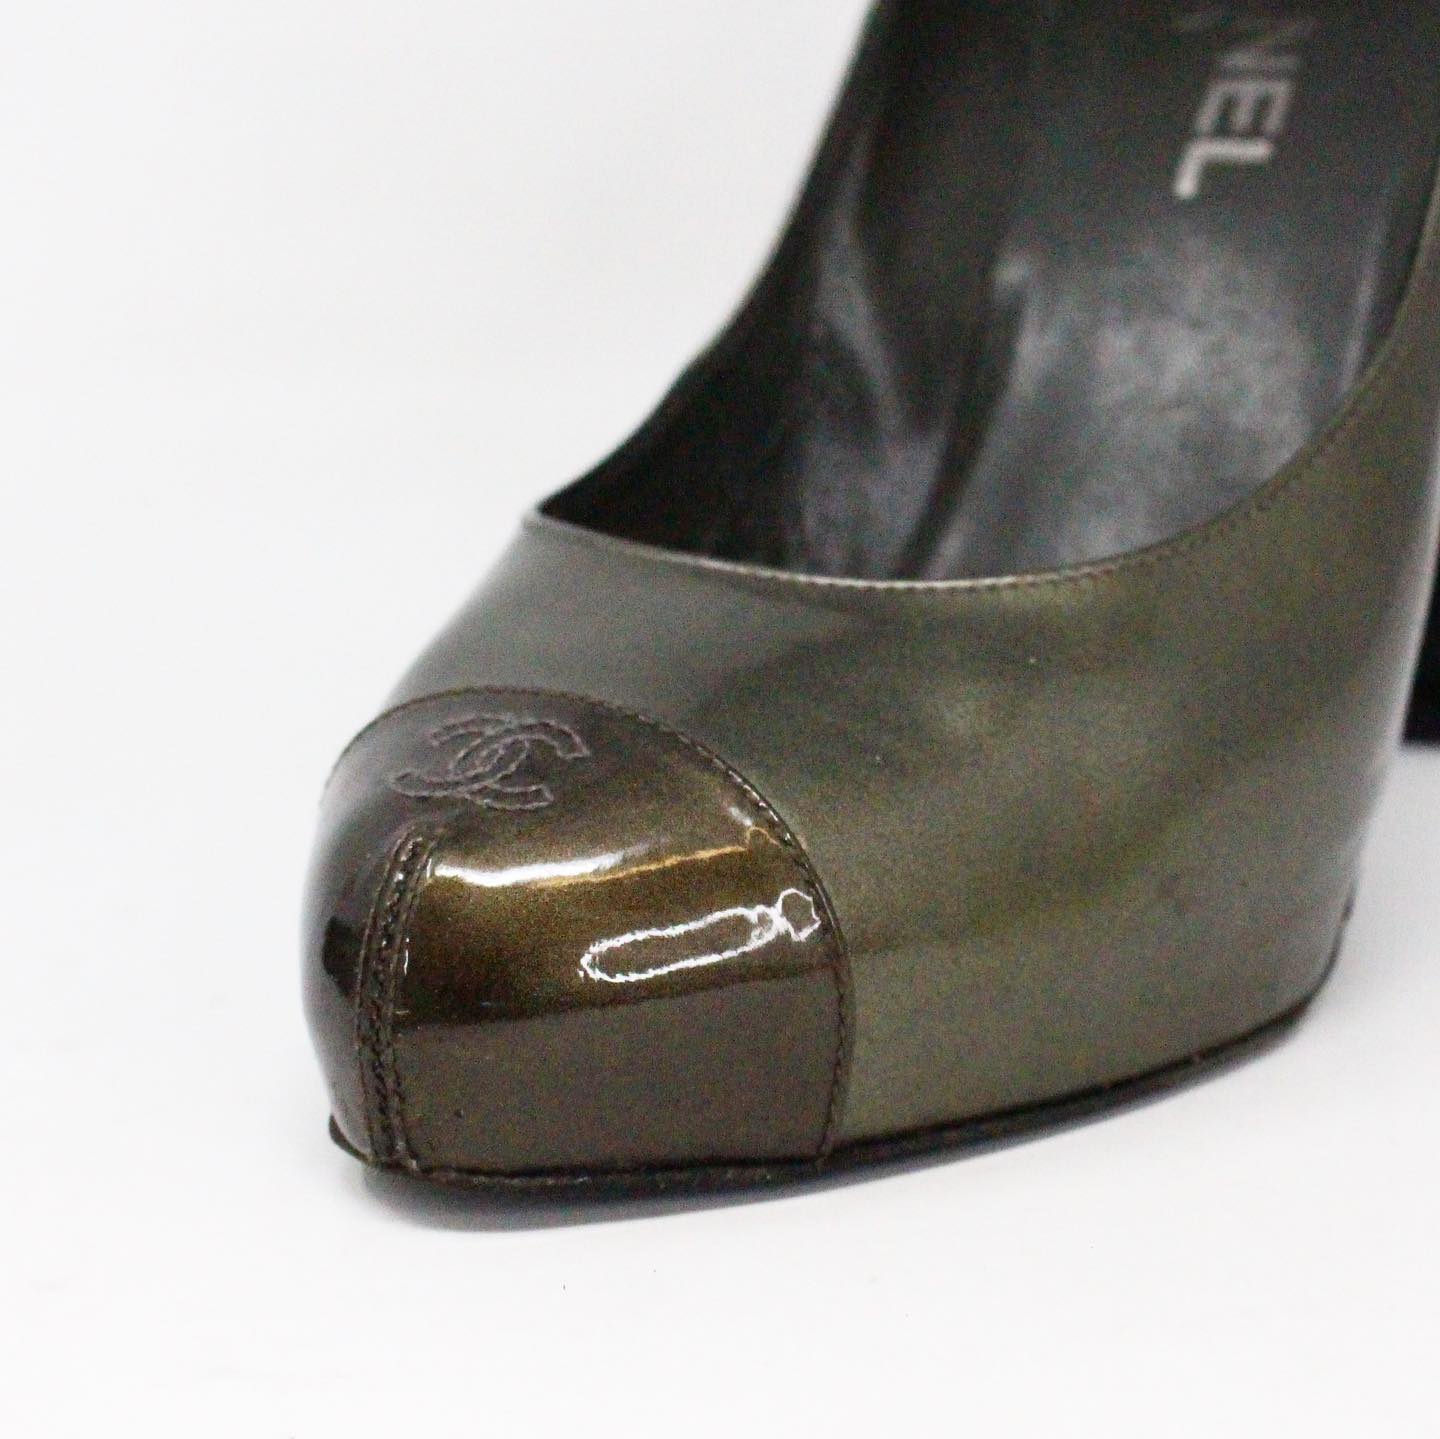 AUTH Chanel Interlocking CC Logo suede shoes Sz 6